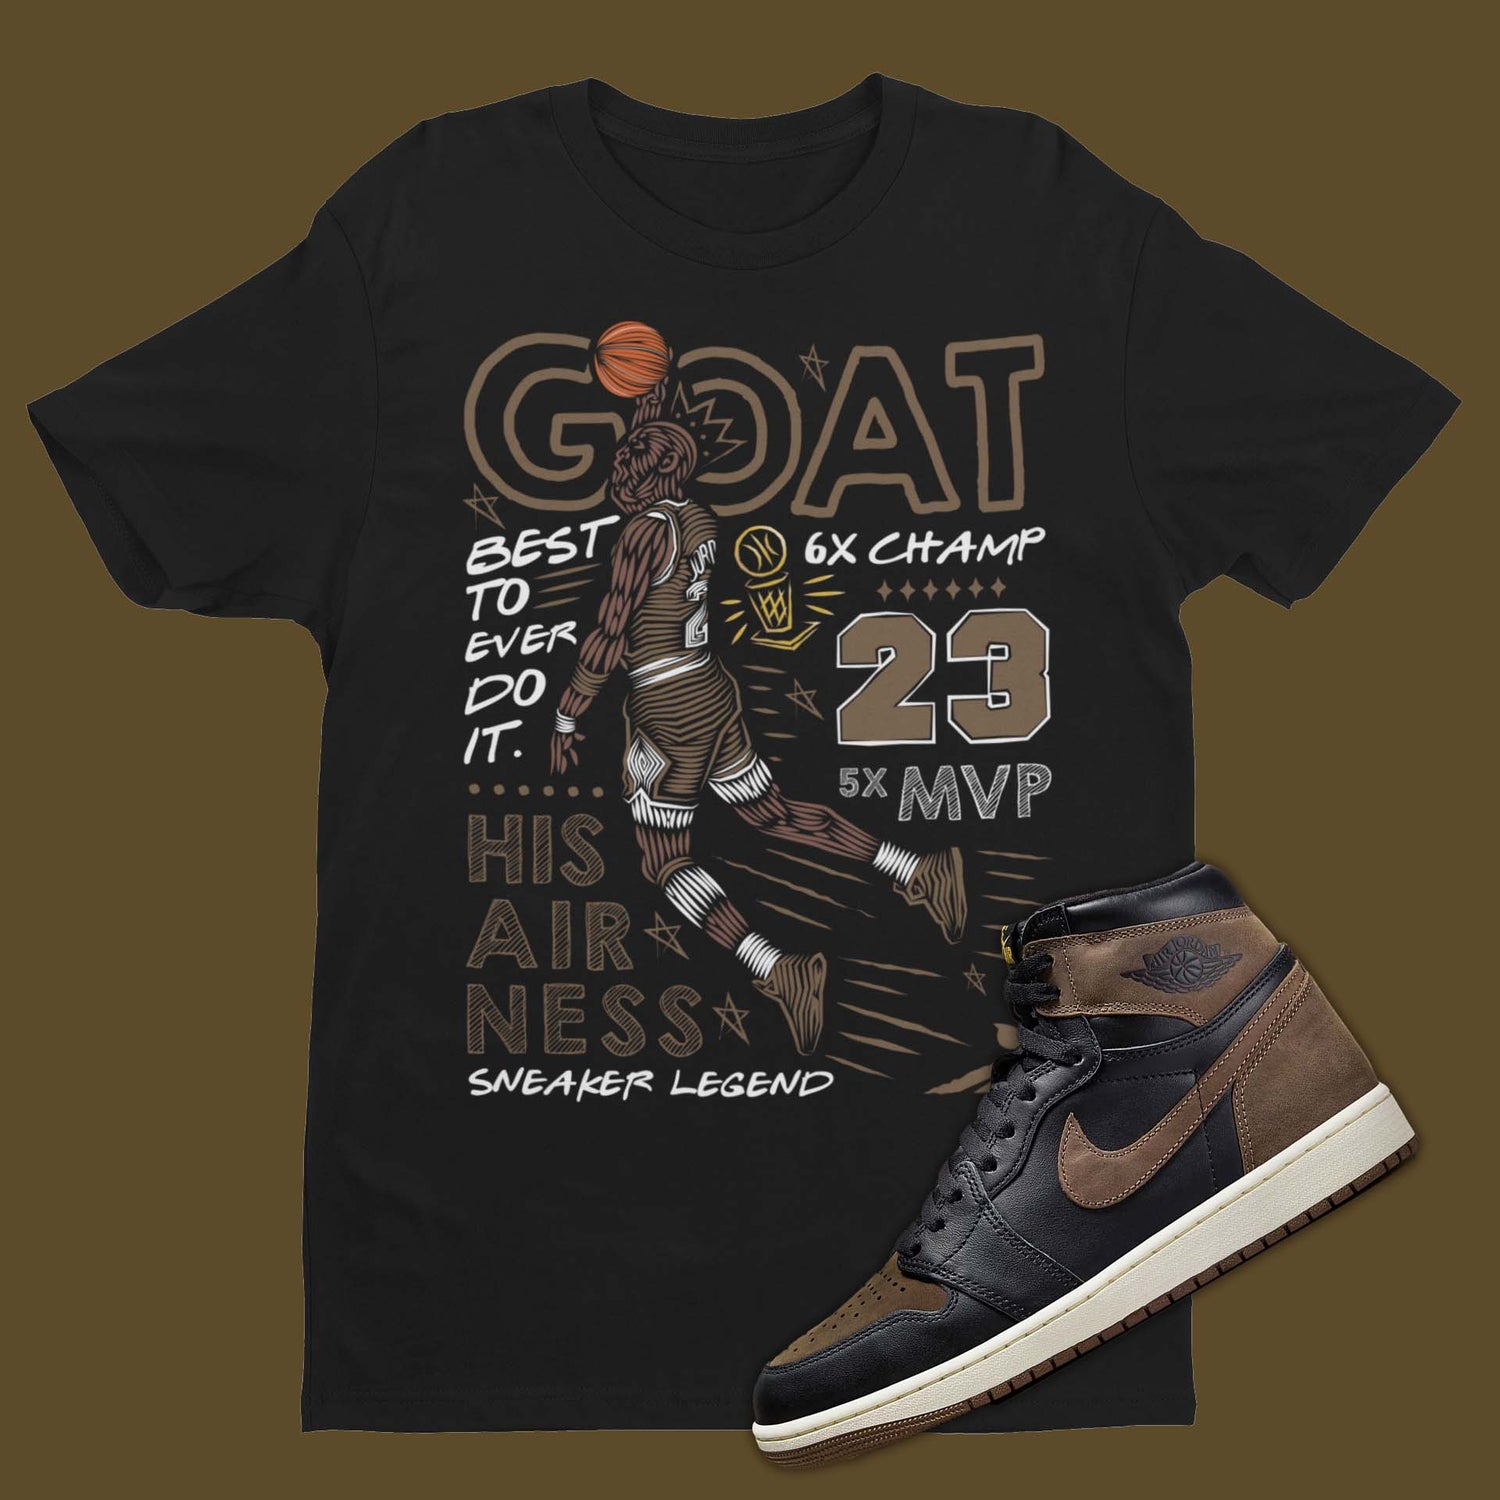 Greatest Ever Air Jordan 1 Palomino Matching T-Shirt with Michael Jordan dunking from SNKADX.